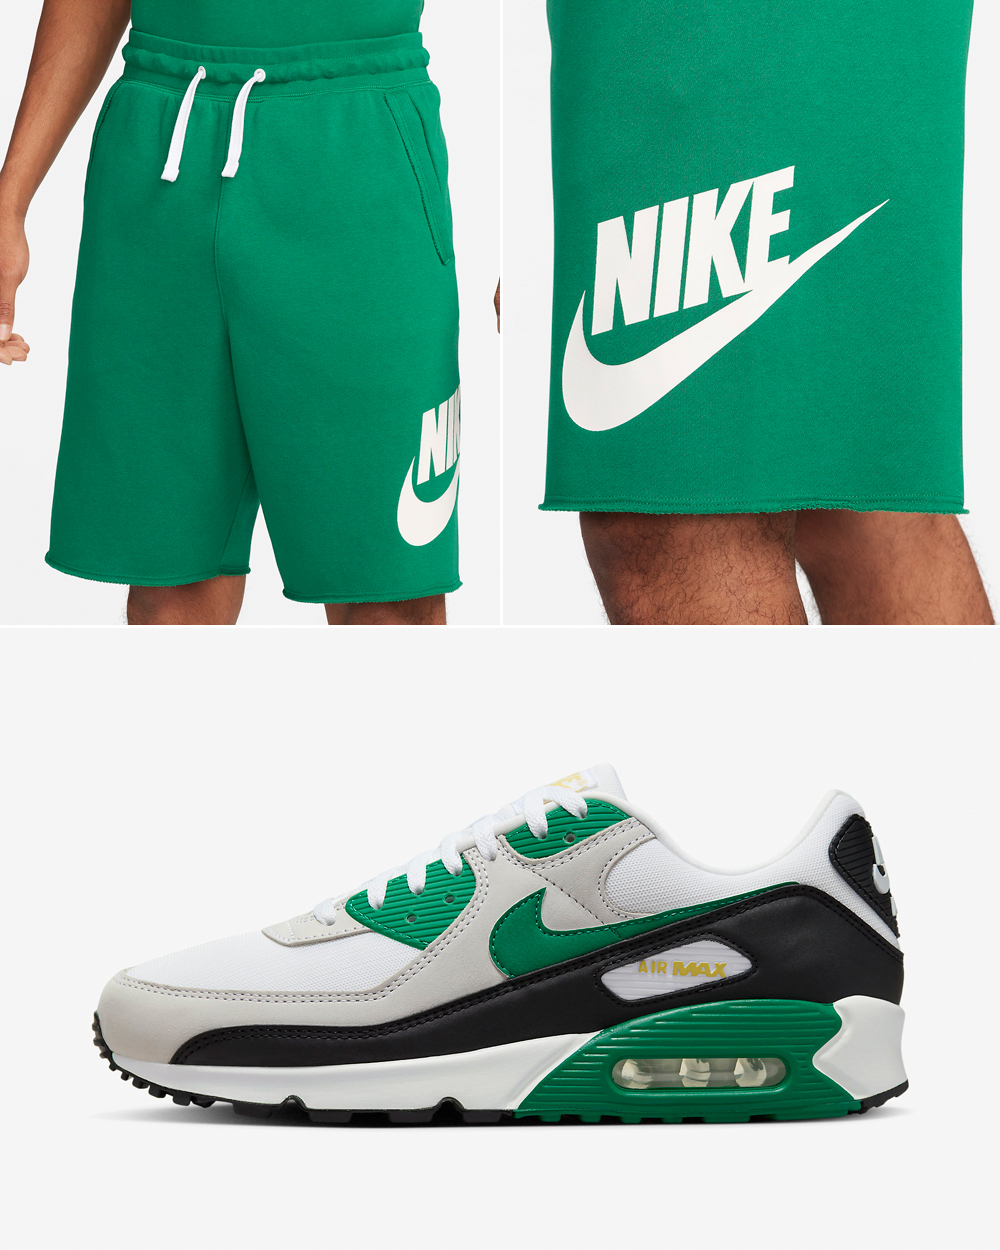 Nike-Air-Max-90-Malachite-Shorts-Match-Outfit